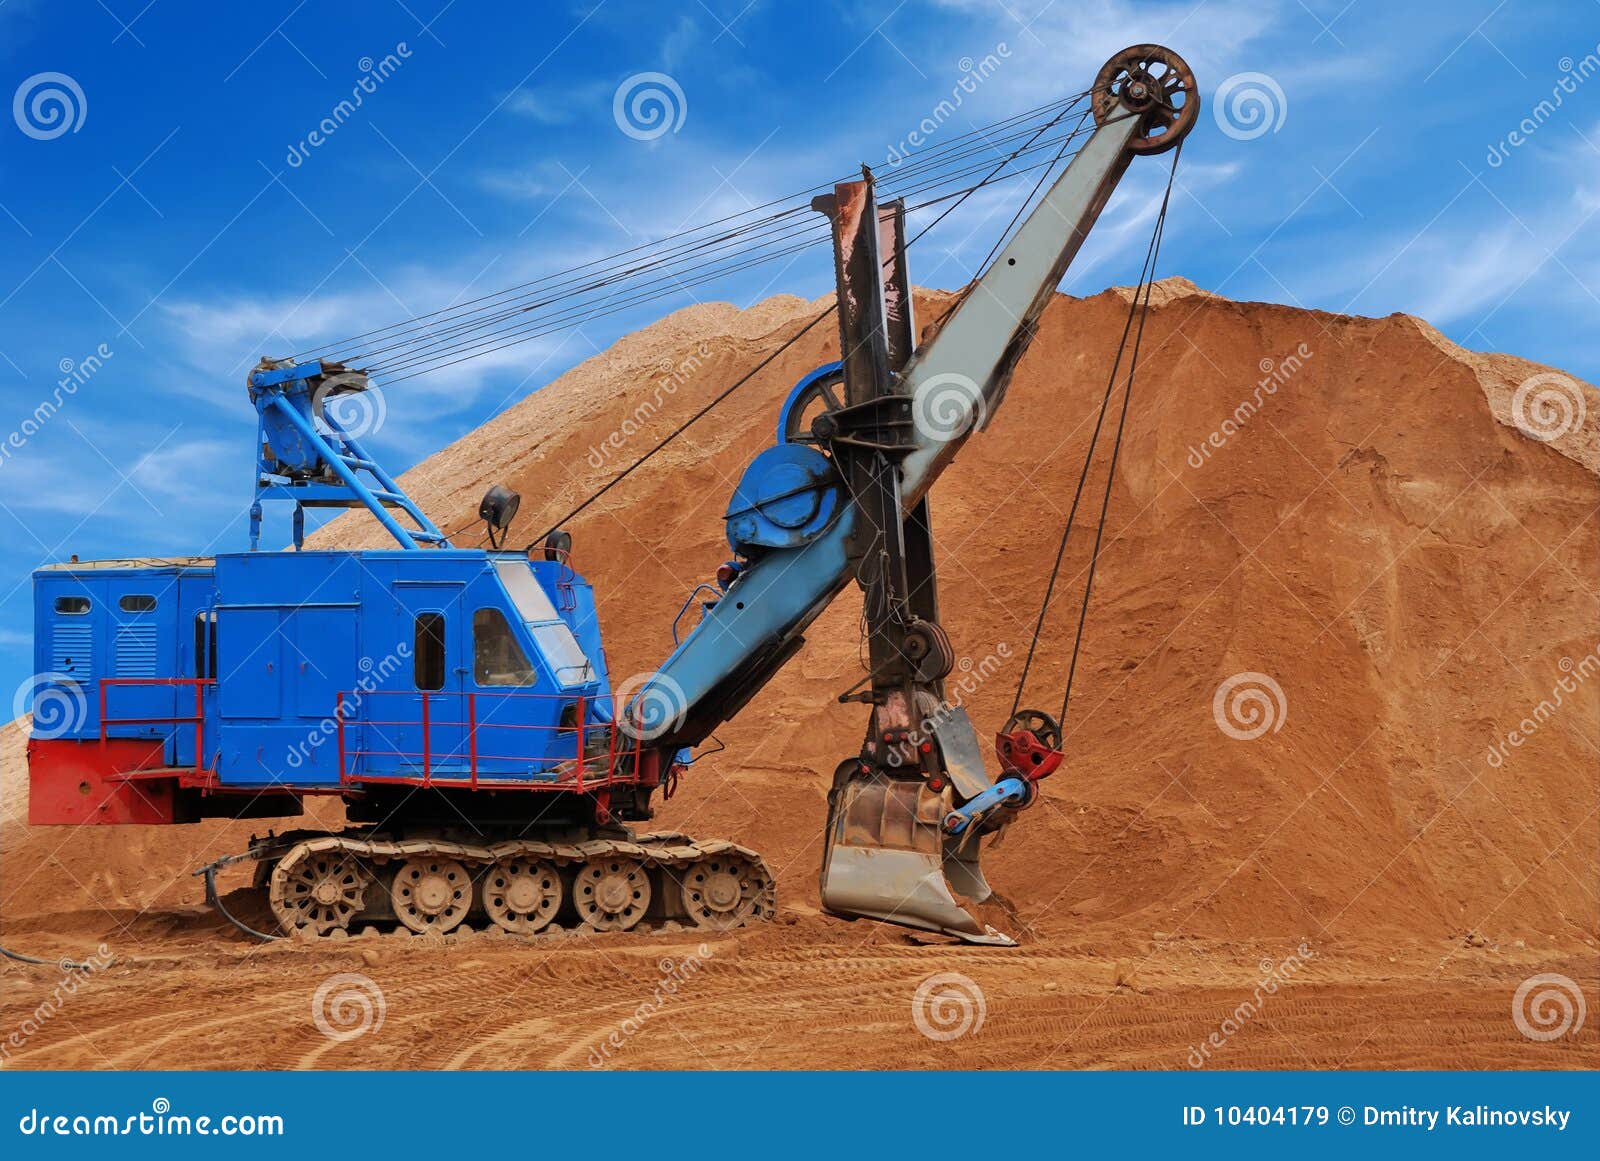 heavy electric excavator in sandpit